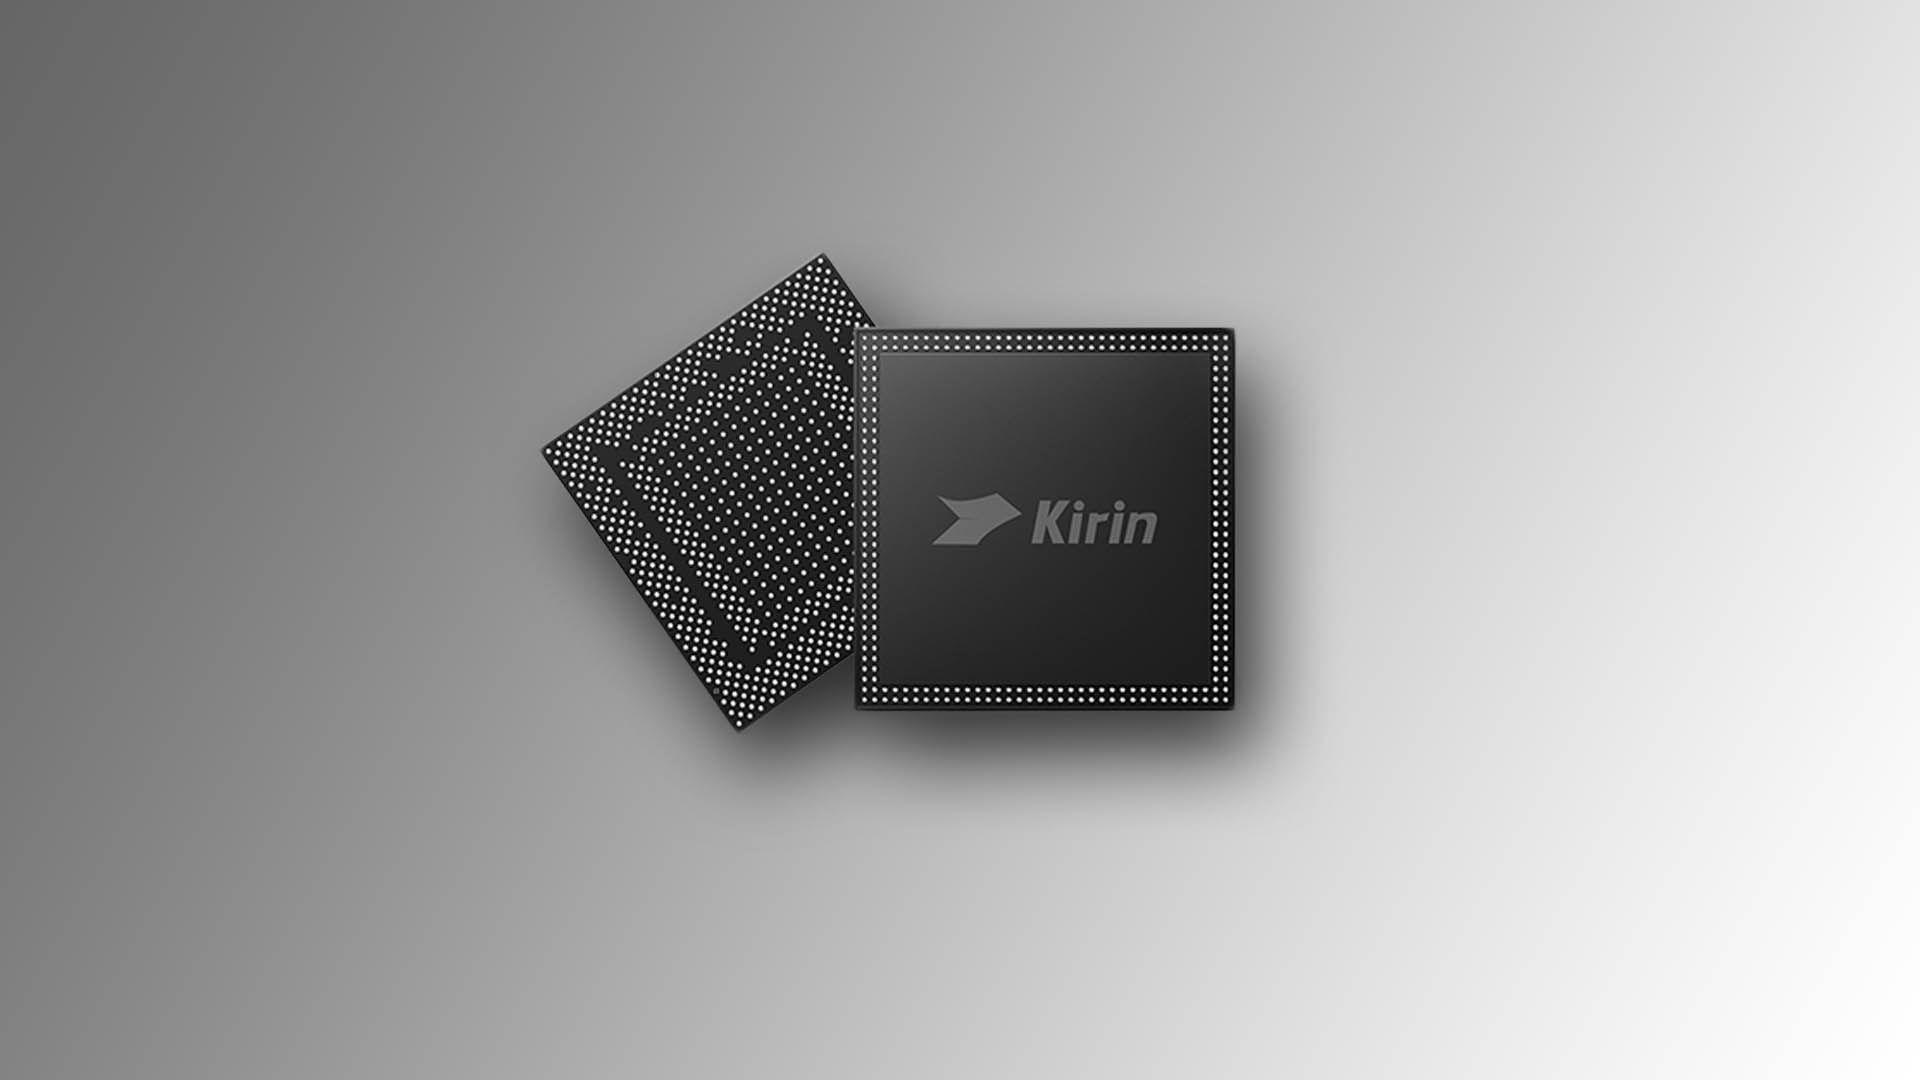 Similar TSMC Logo - Kirin 980 Confirmed to Be Made on TSMC's 7nm FinFET Process With ...